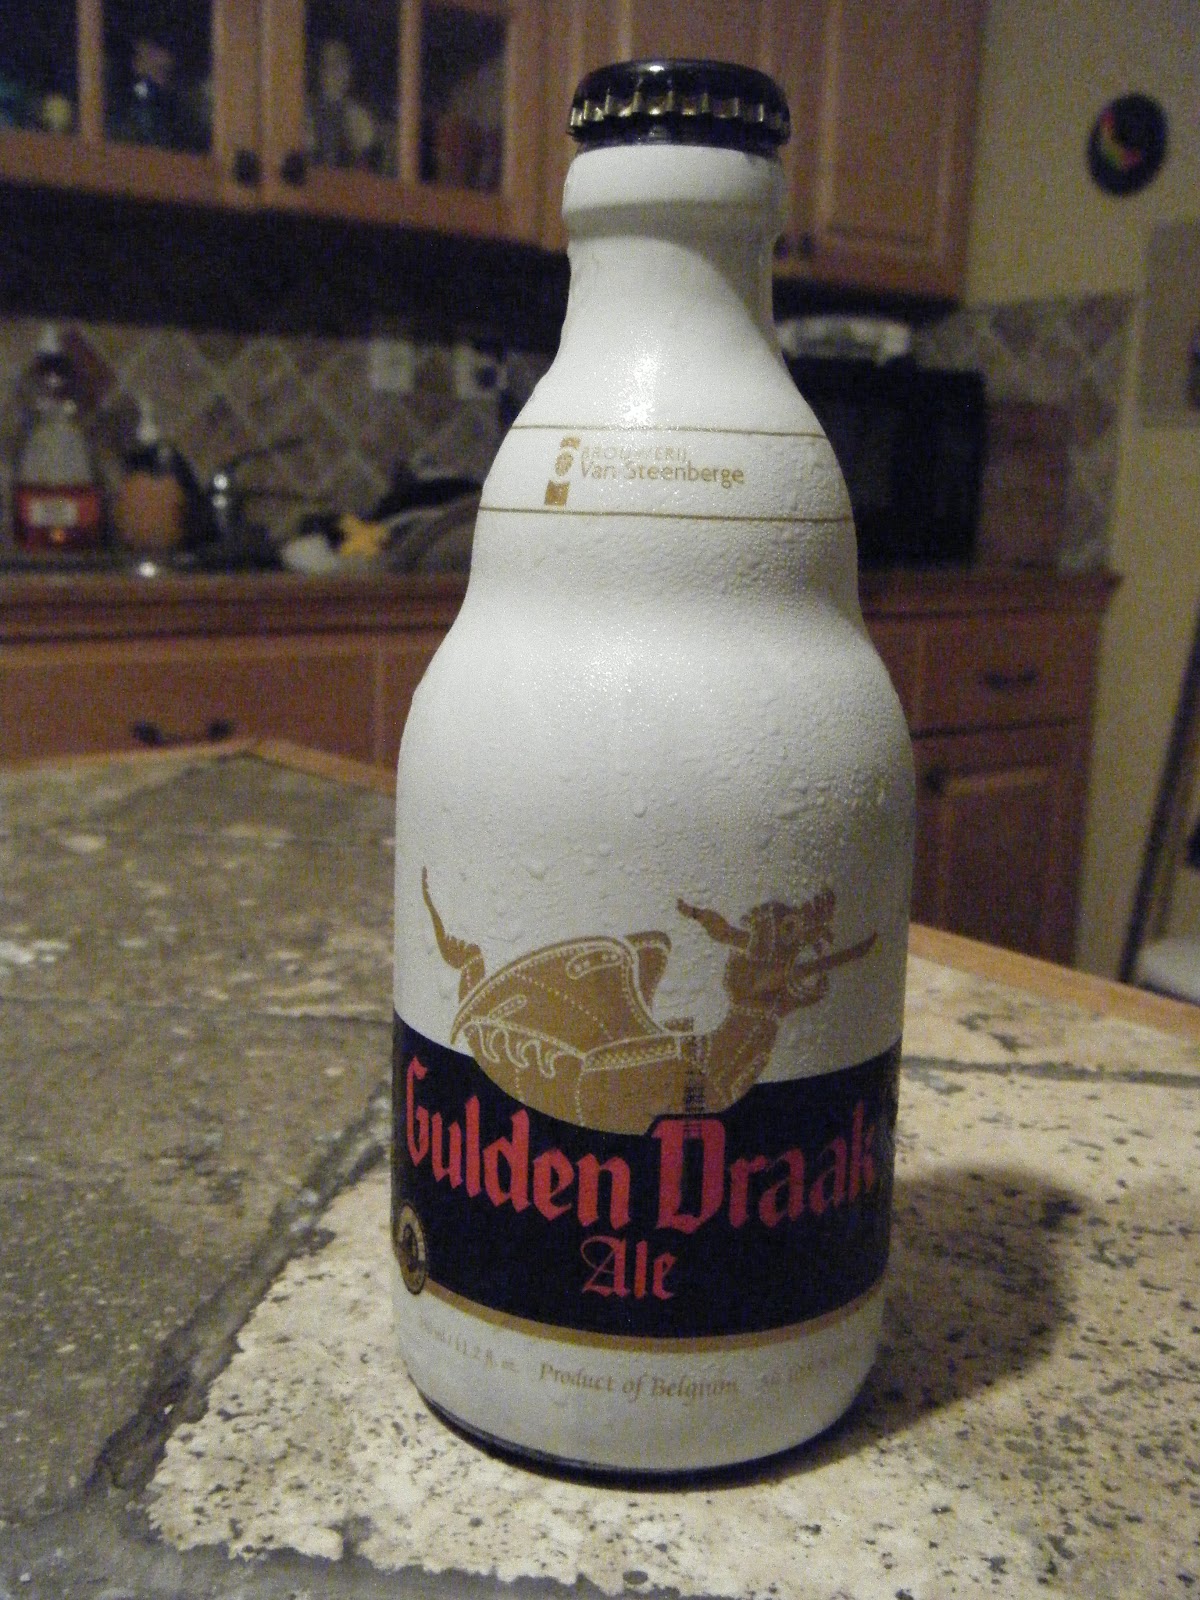 Introducing Gulden Draak Ale.